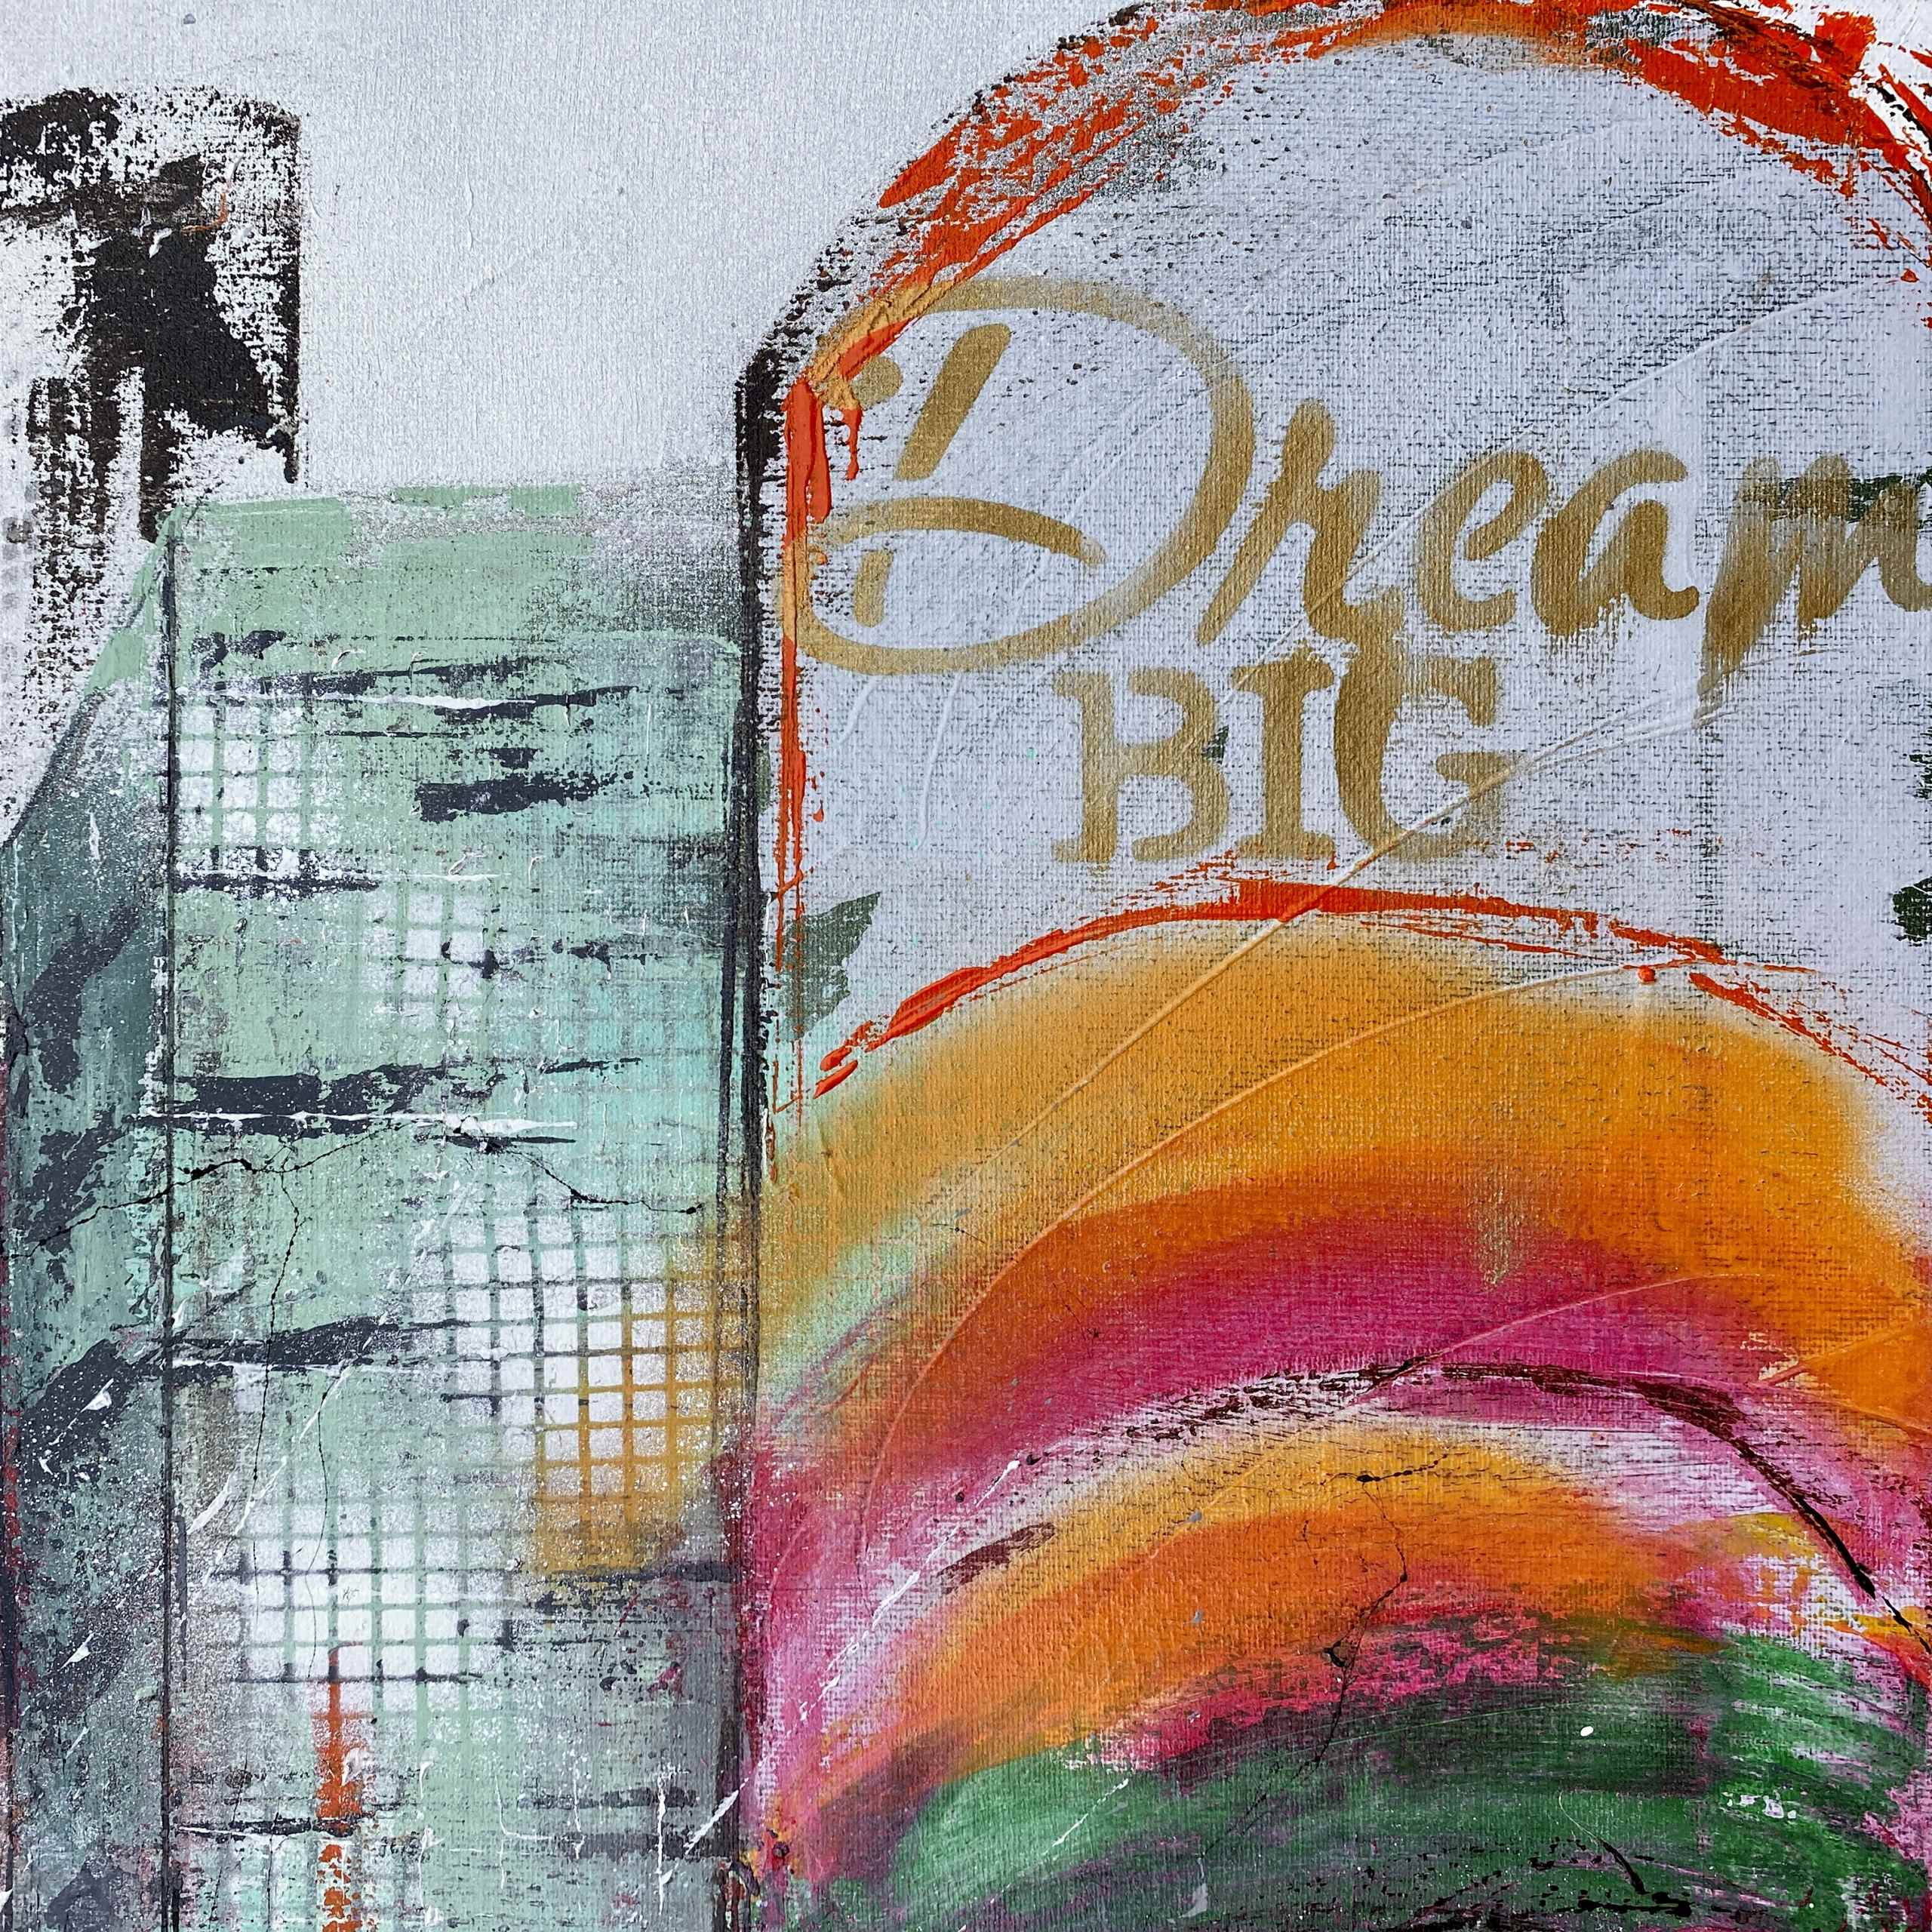 Detail of artwork "Dream Big" by Nina Groth